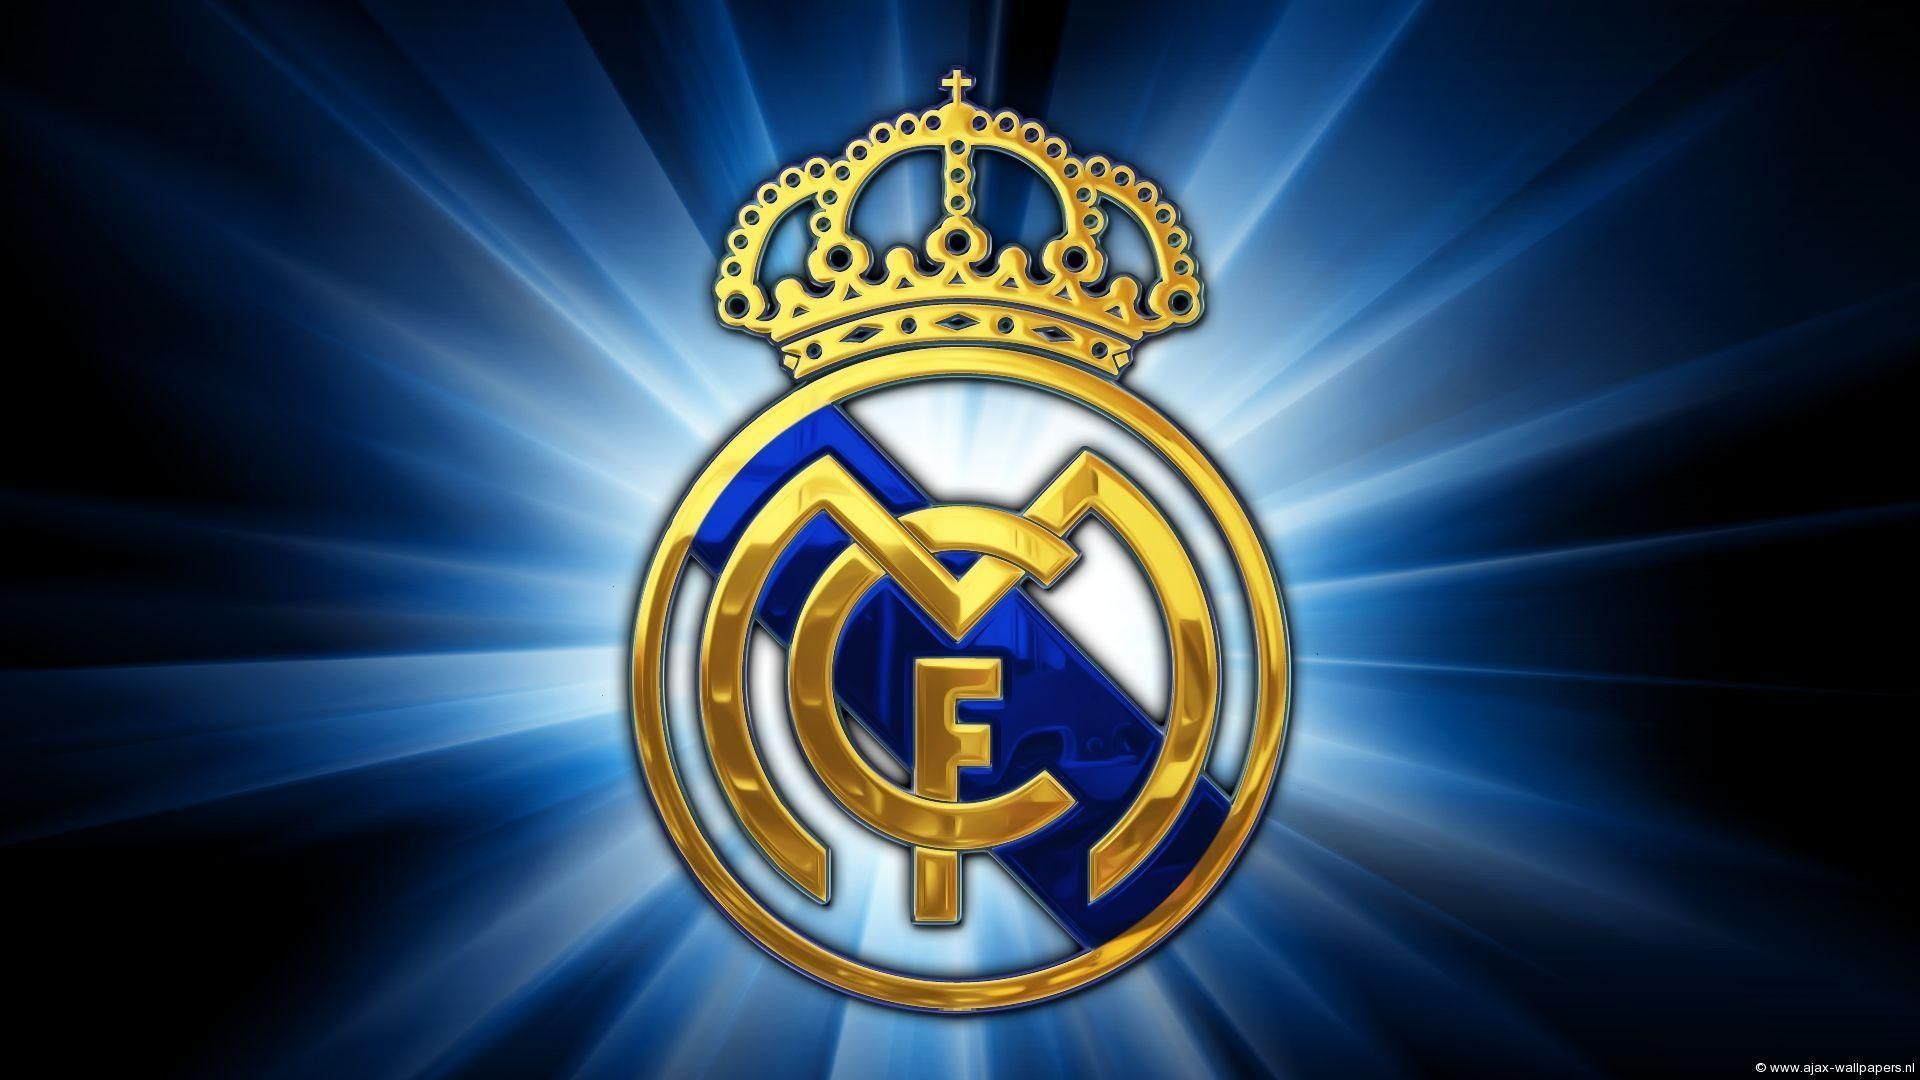 Real Madrid Hintergrundbild 1920x1080. Real Madrid Logo. Real madrid logo wallpaper, Real madrid wallpaper, Madrid wallpaper